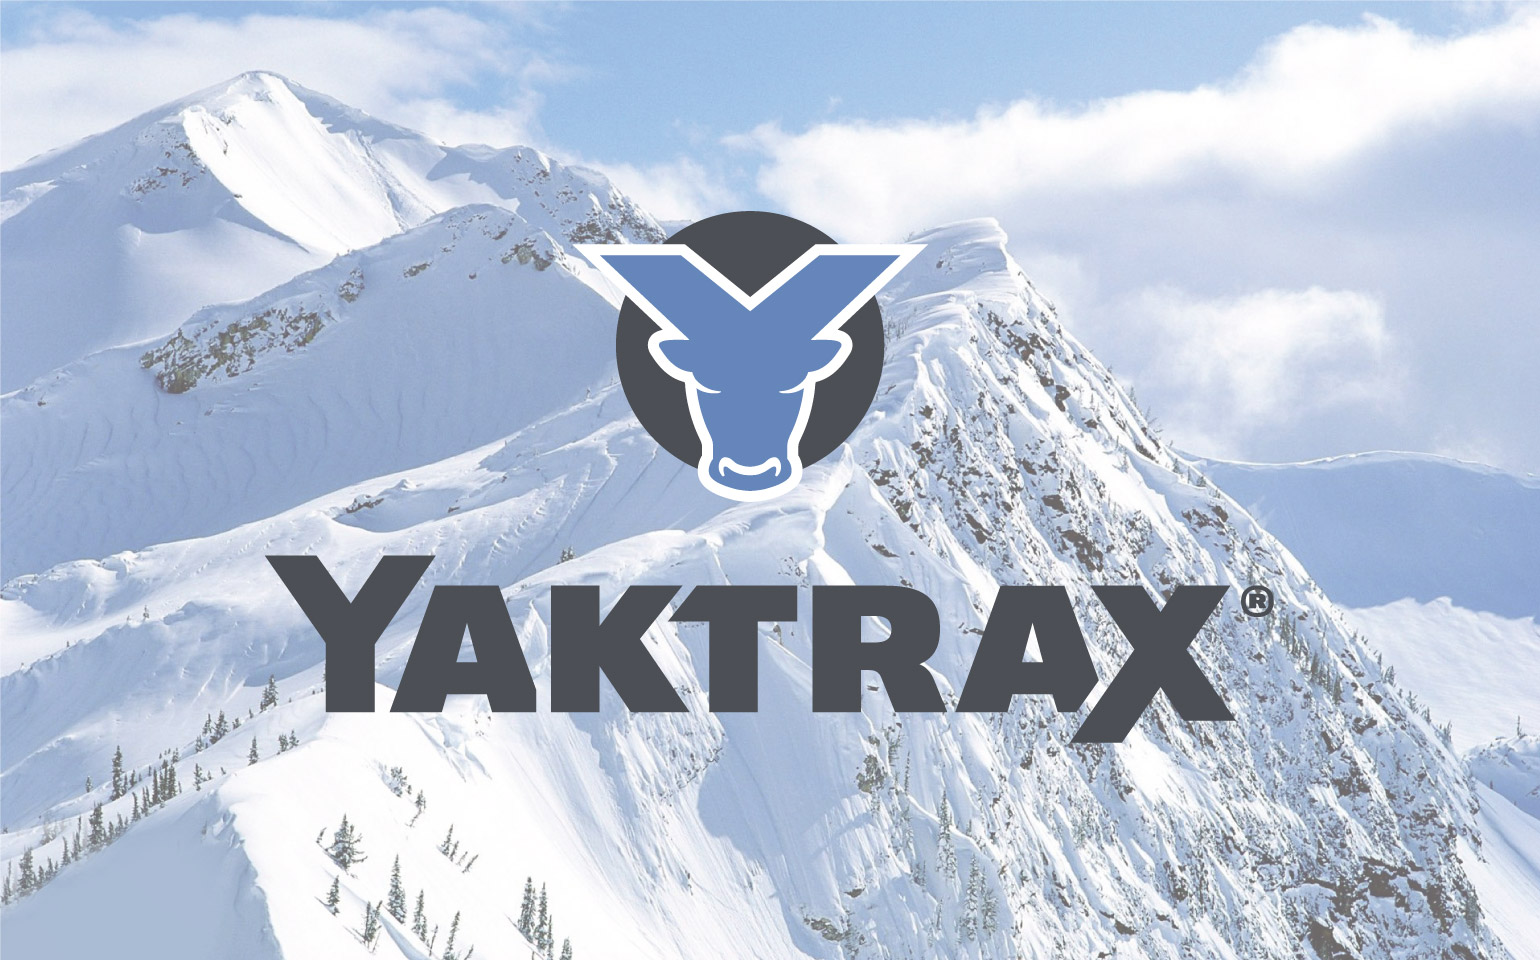 Yaktrax Logo